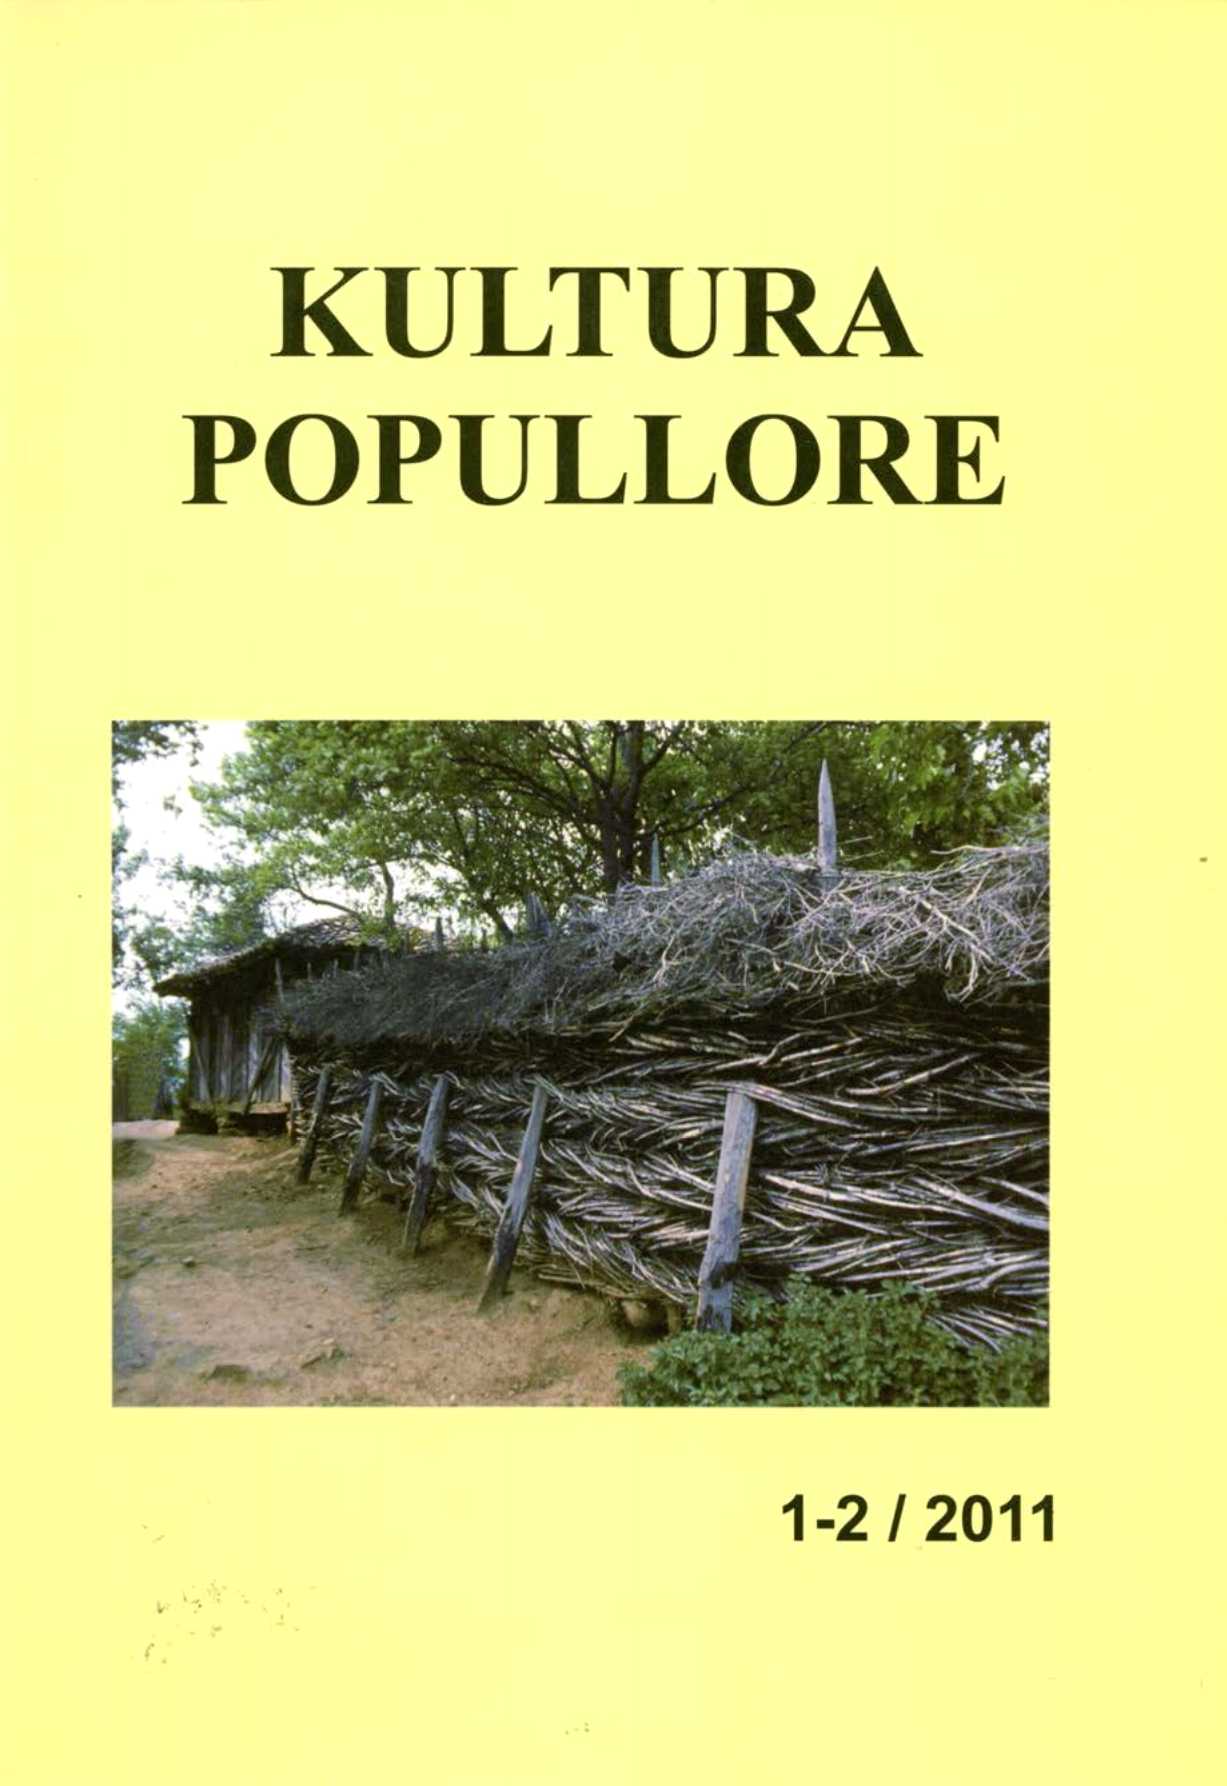 Revista “KULTURA POPULLORE 2010” Cover Image